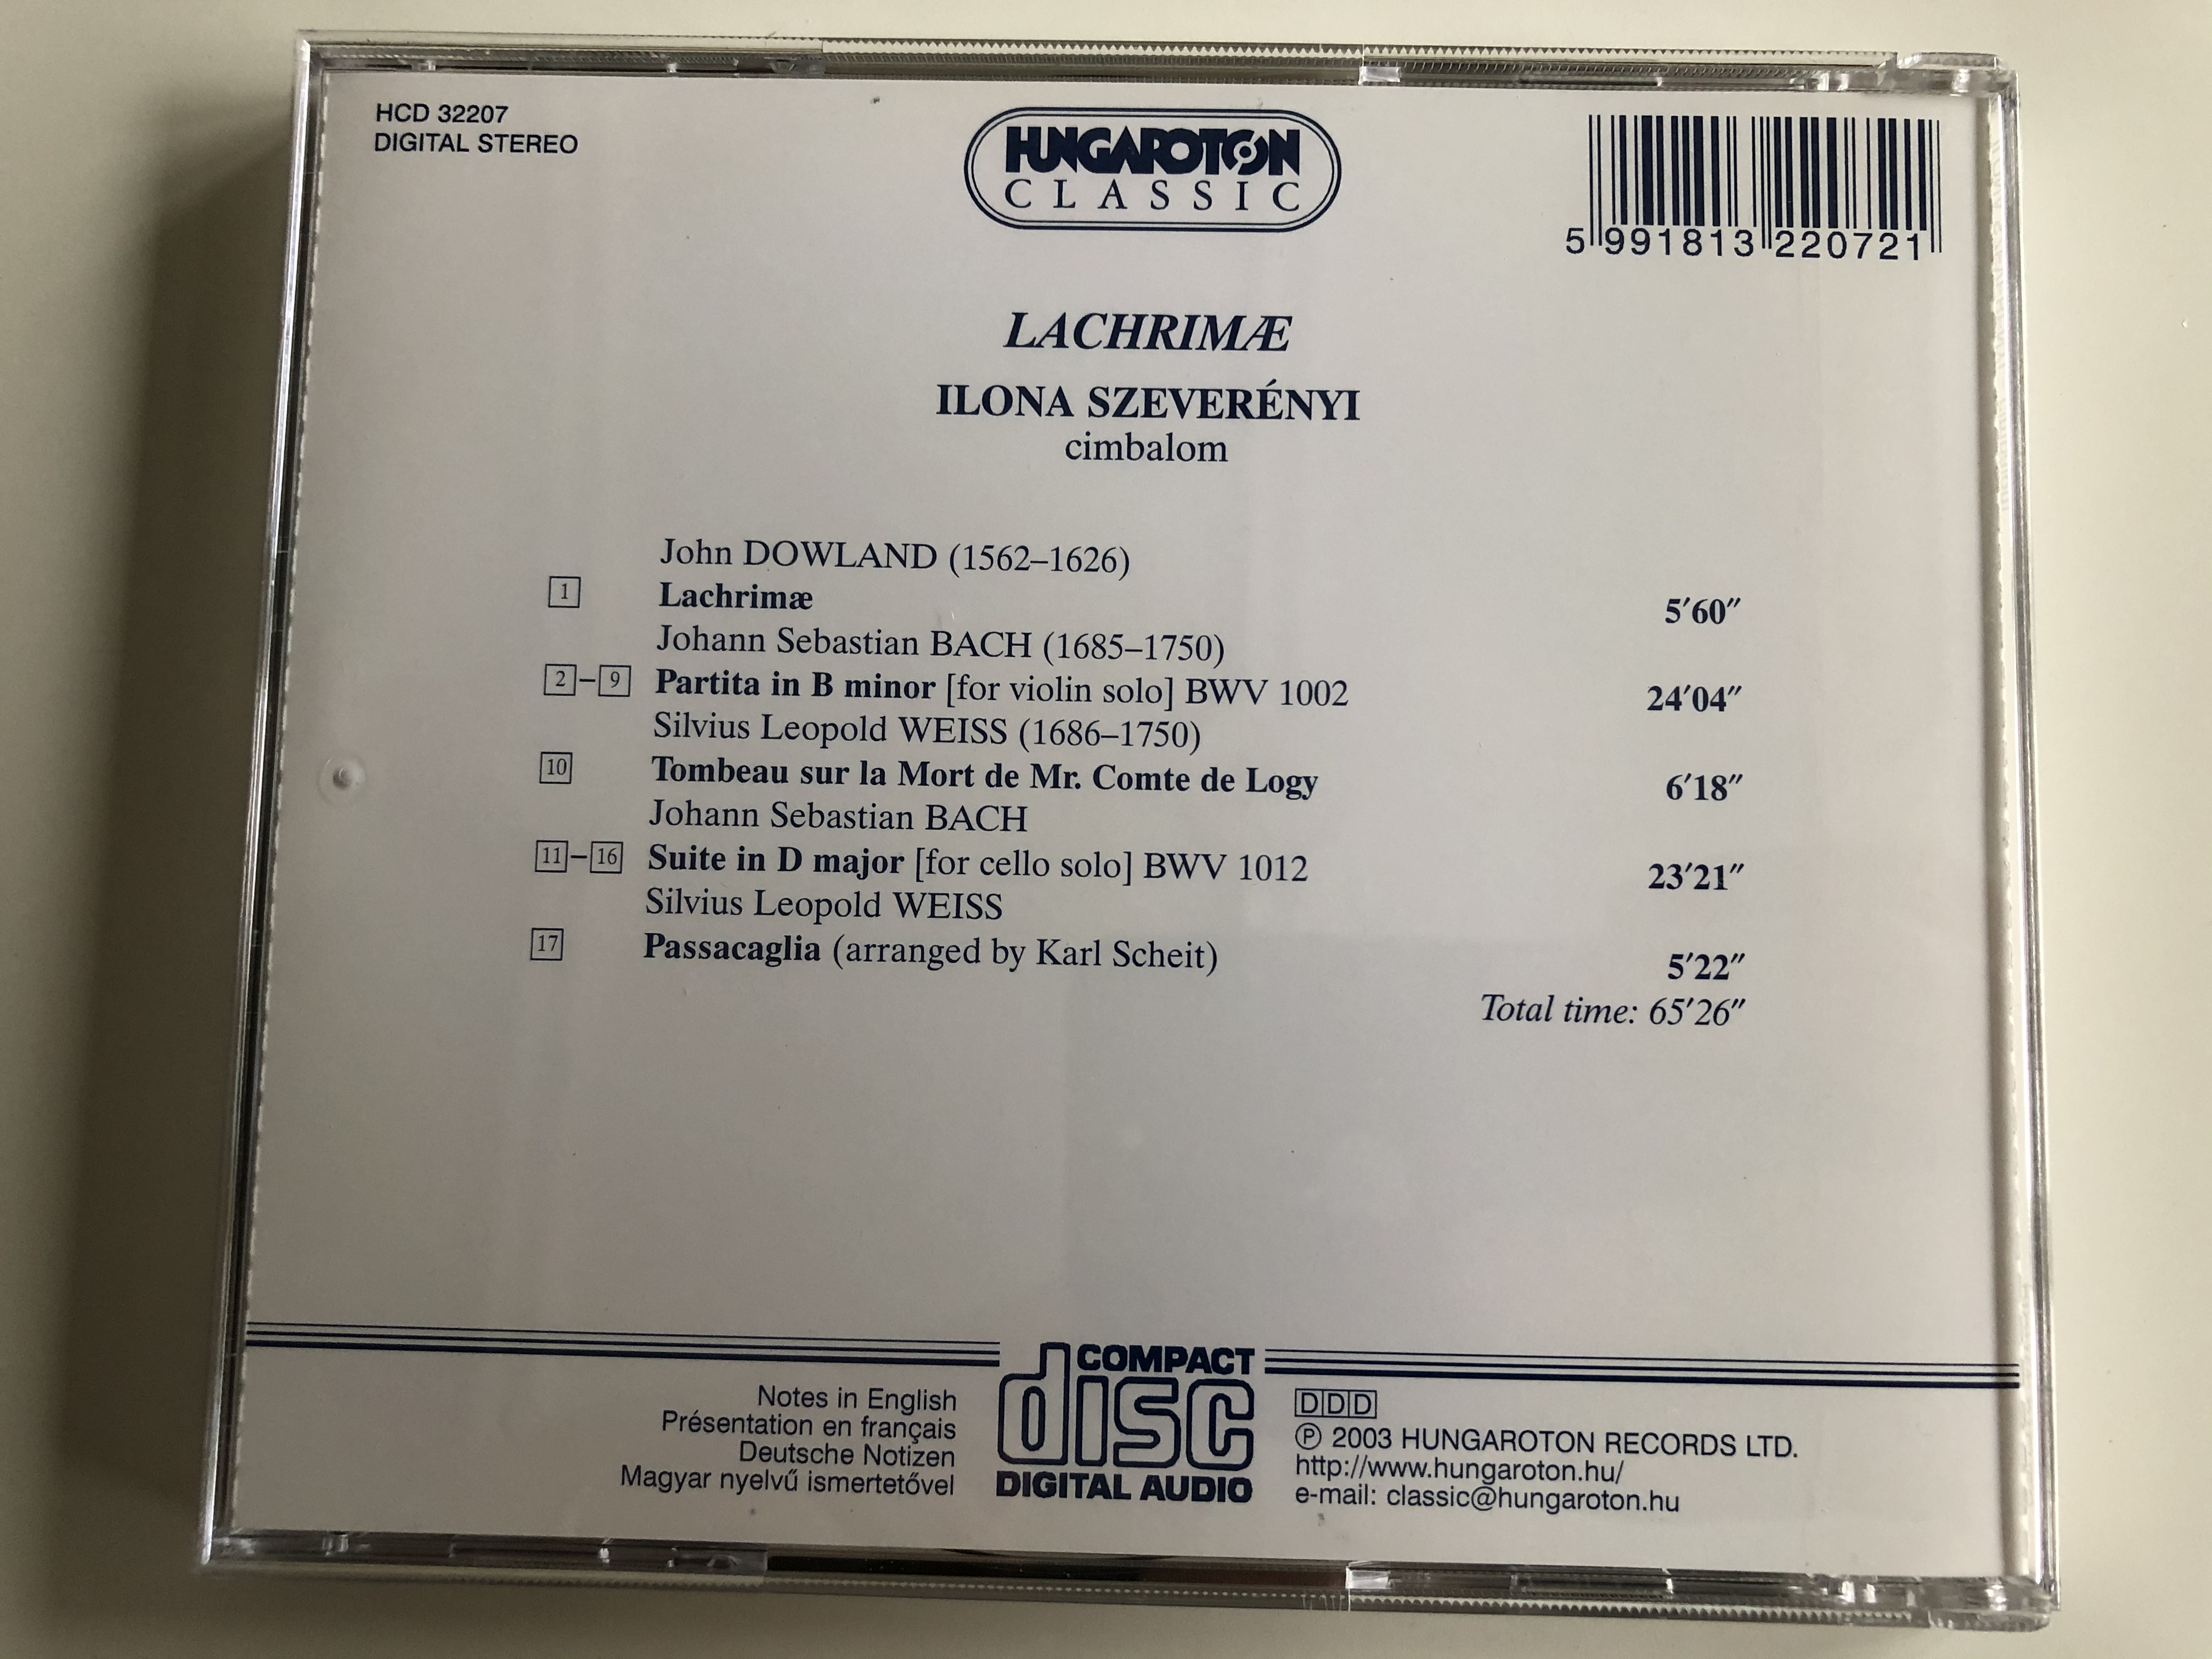 lachrime-works-by-dowland-bach-weiss-cimbalom-ilona-szeverenyi-hungaroton-classic-audio-cd-2003-stereo-hcd-32207-8-.jpg